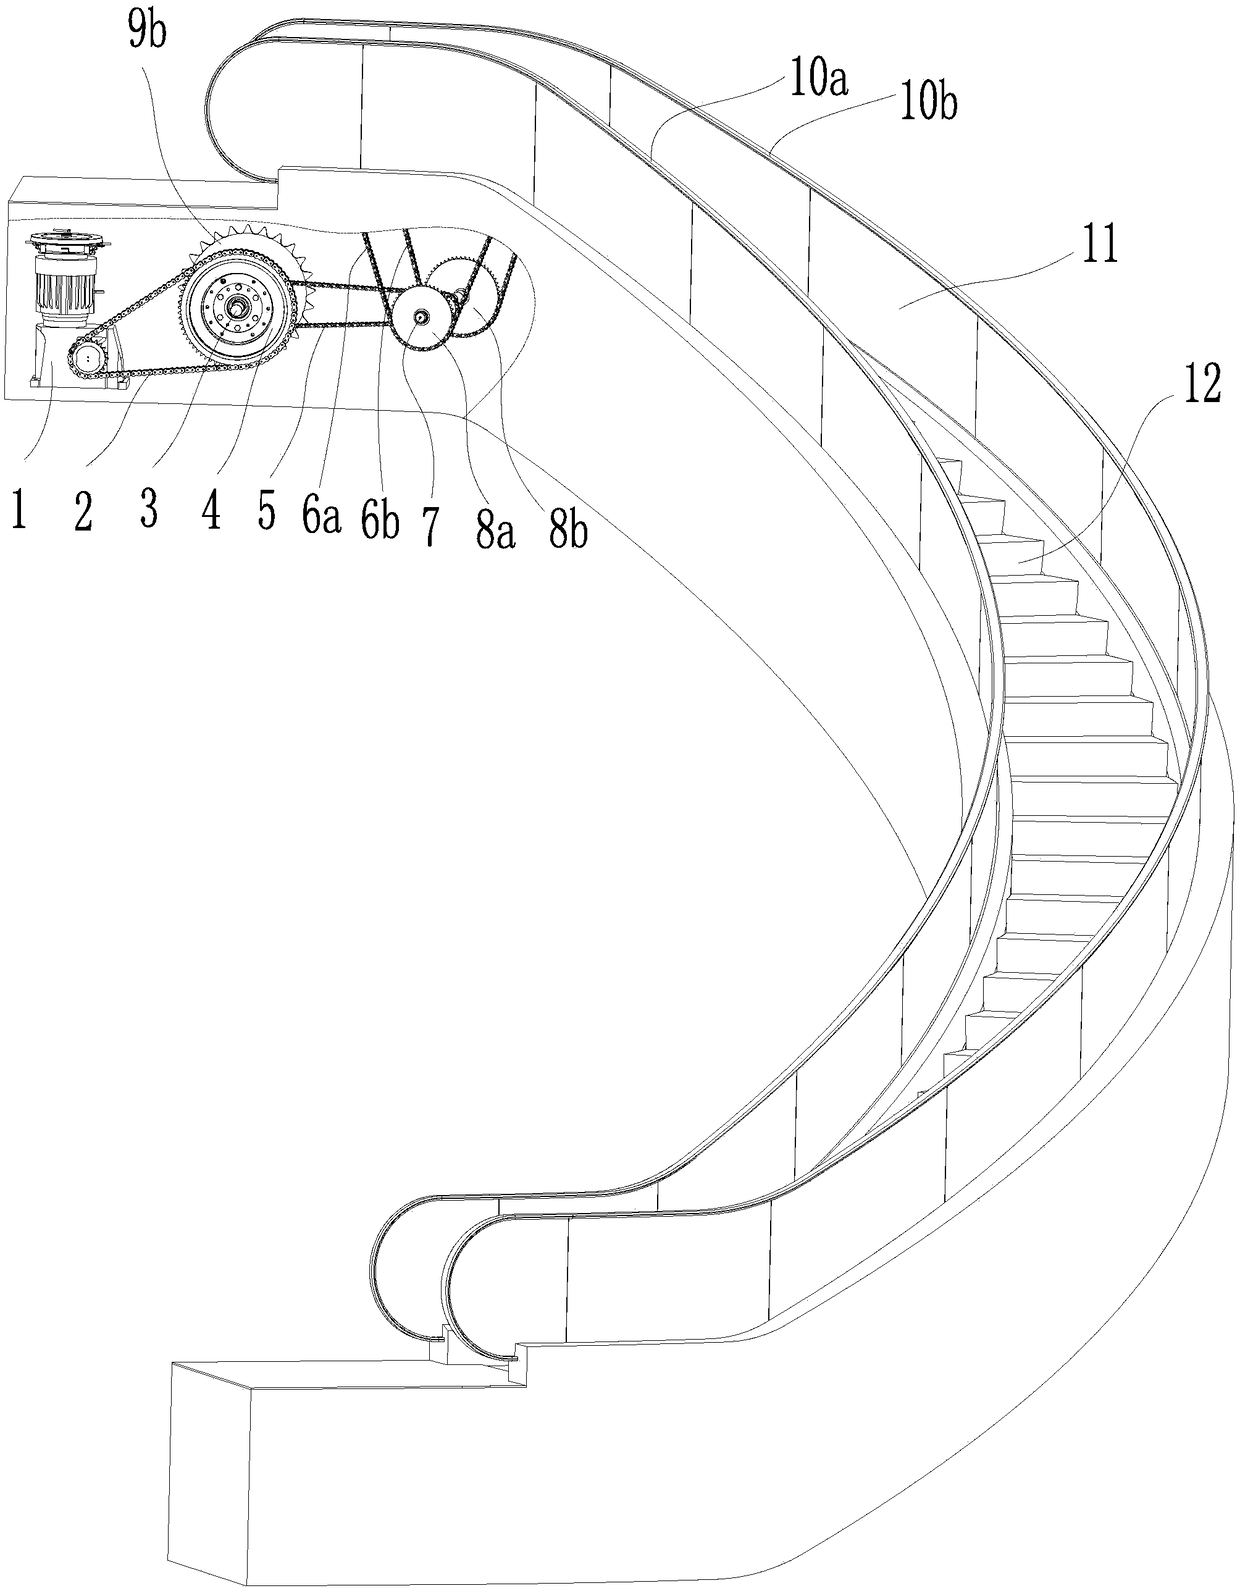 Handrail belt driving device of spiral escalator